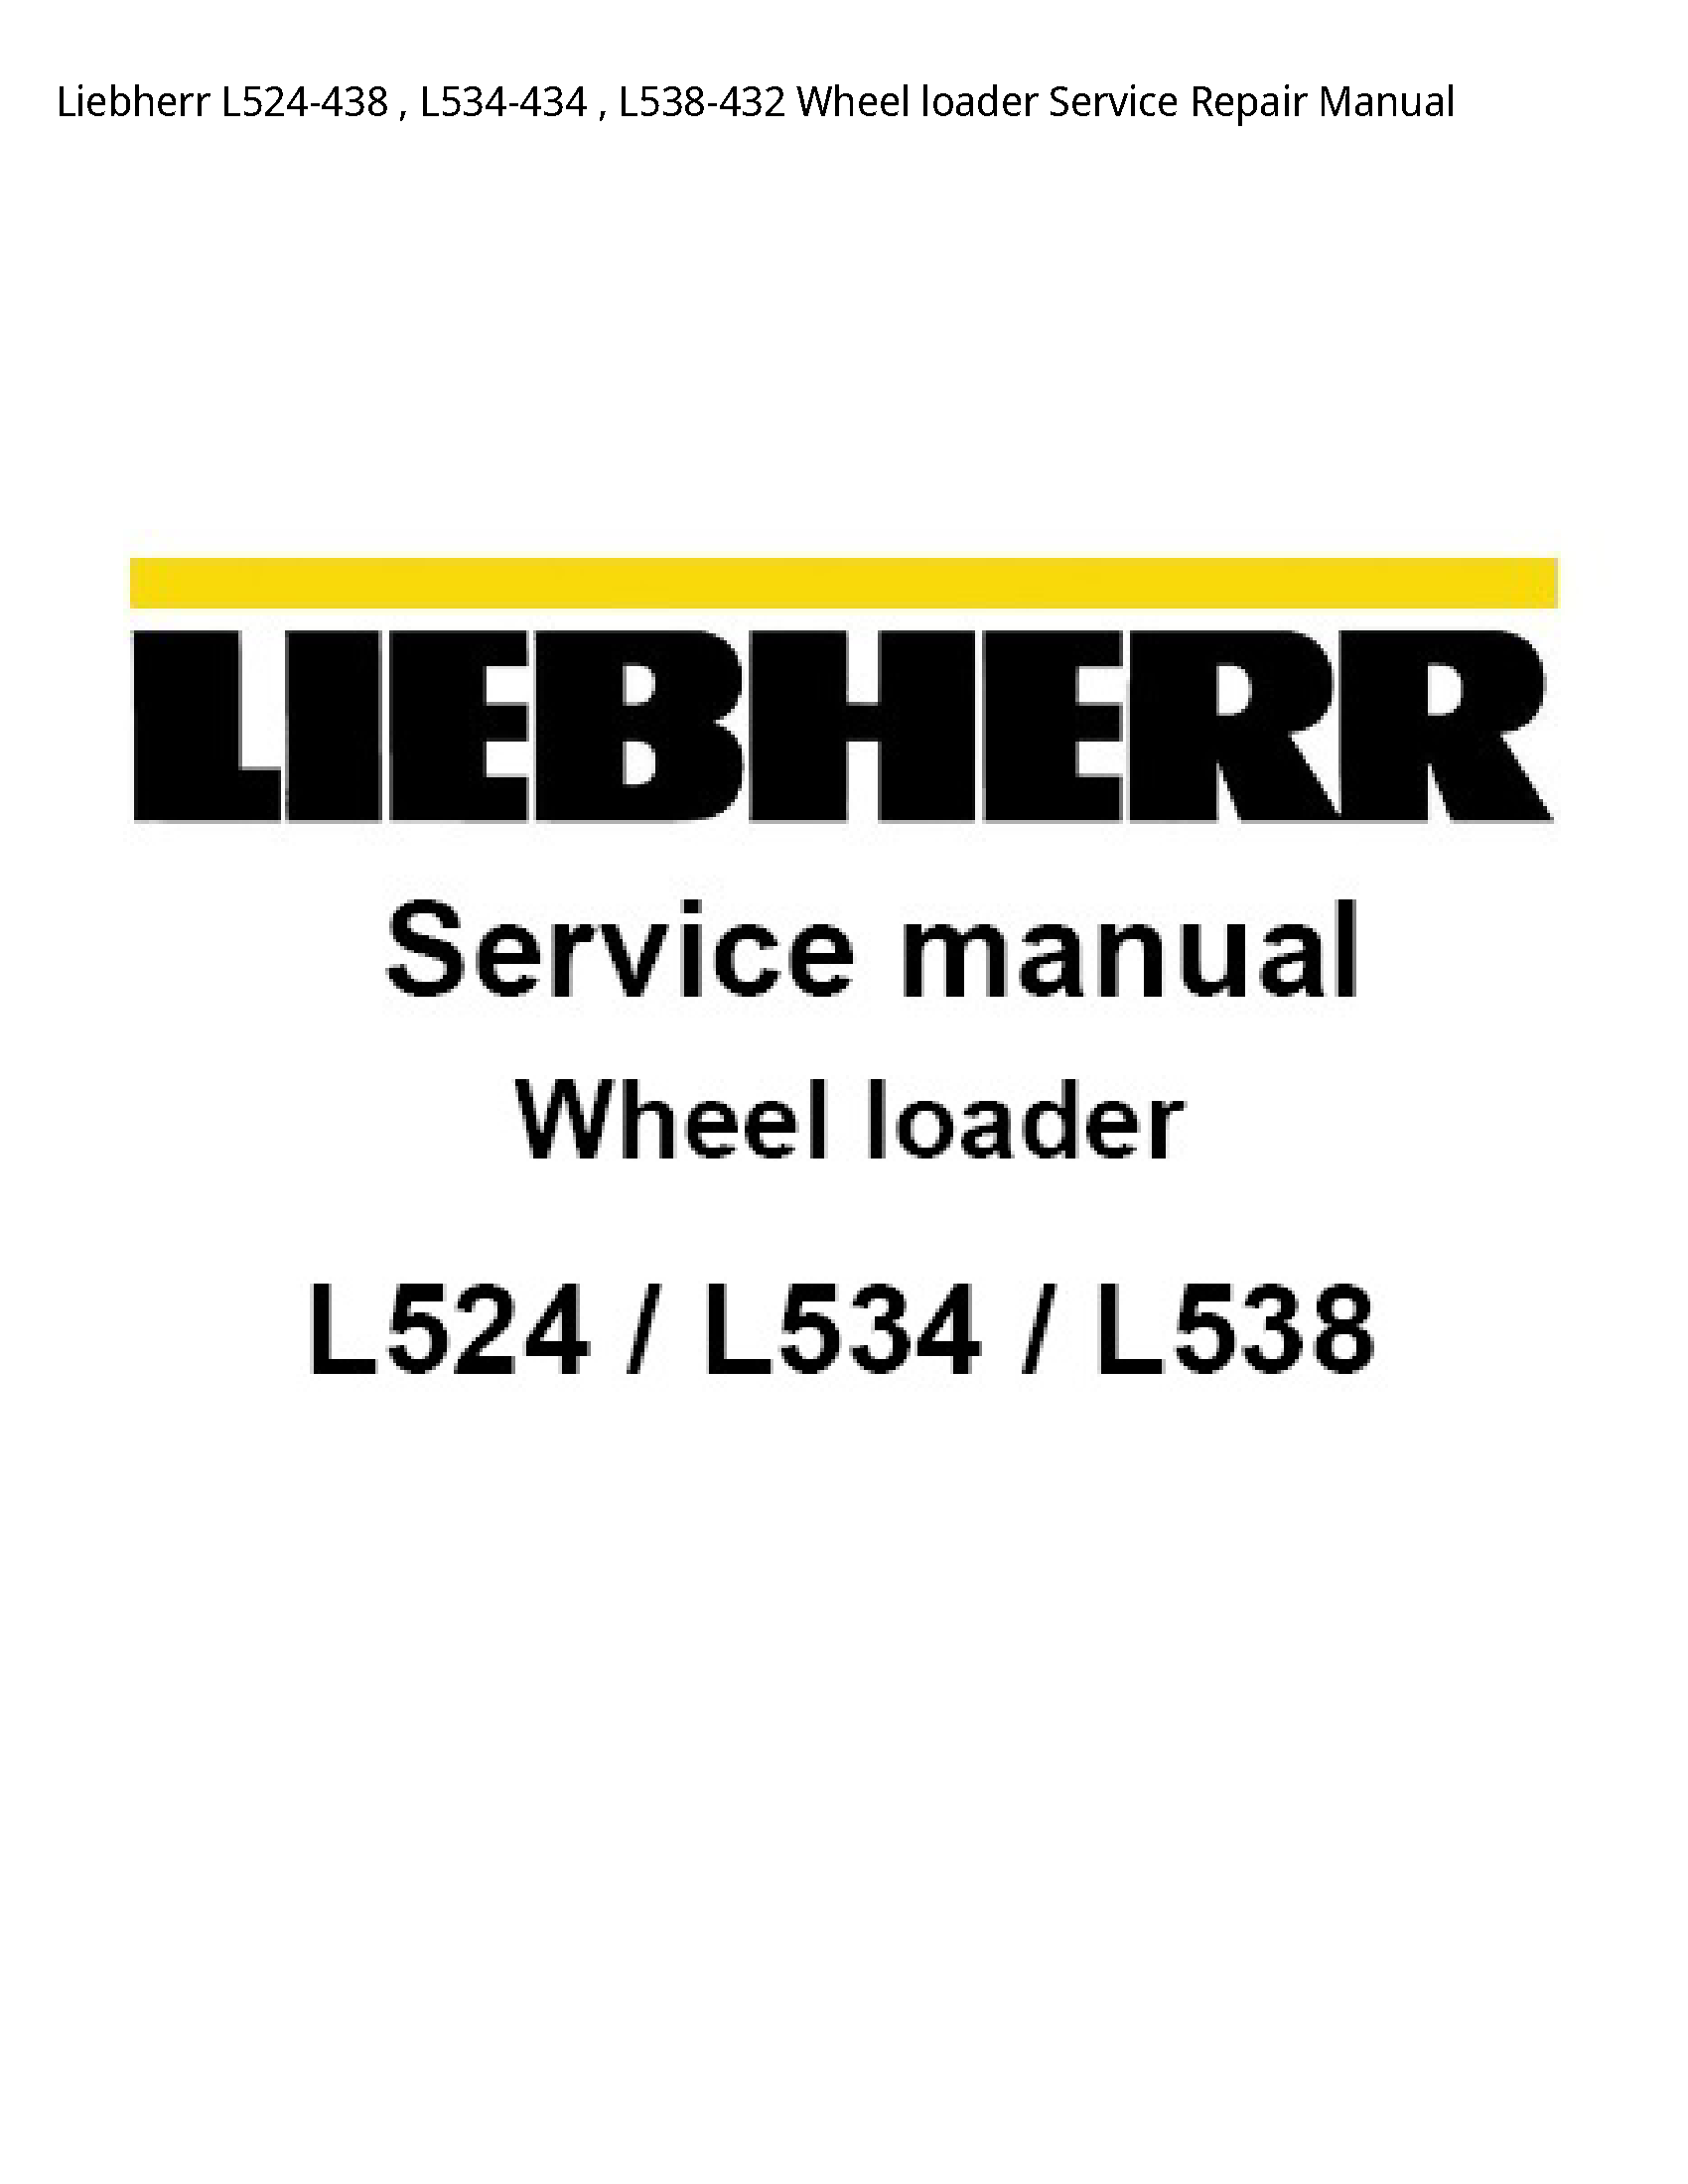 Liebherr L524-438 Wheel loader manual